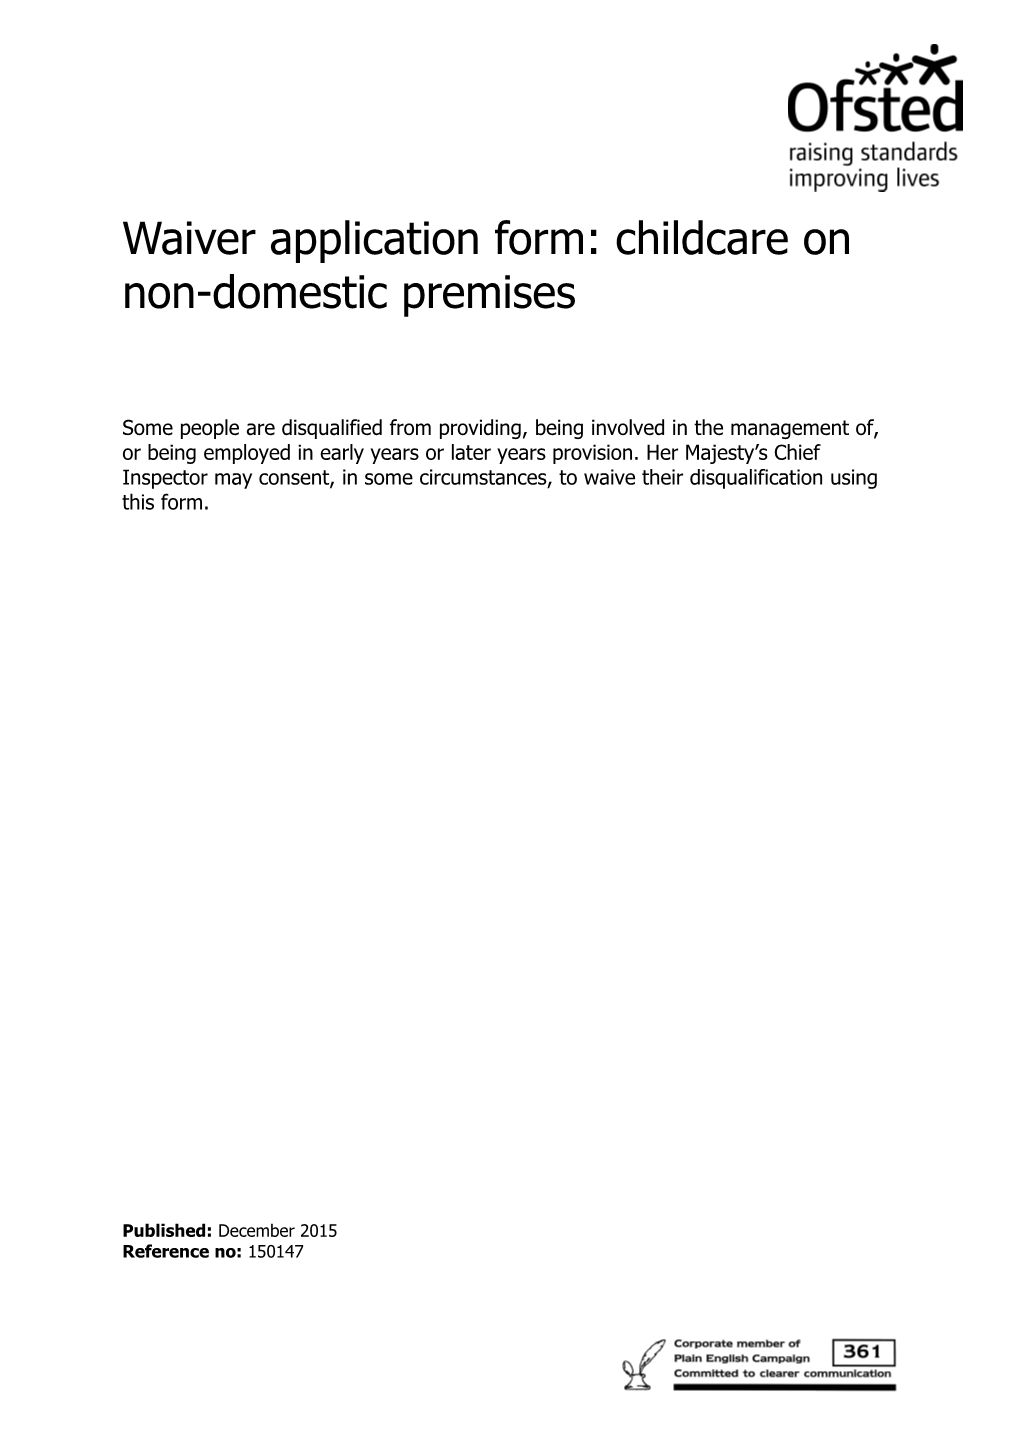 Waiver Application Form: Childcare on Non-Domestic Premises